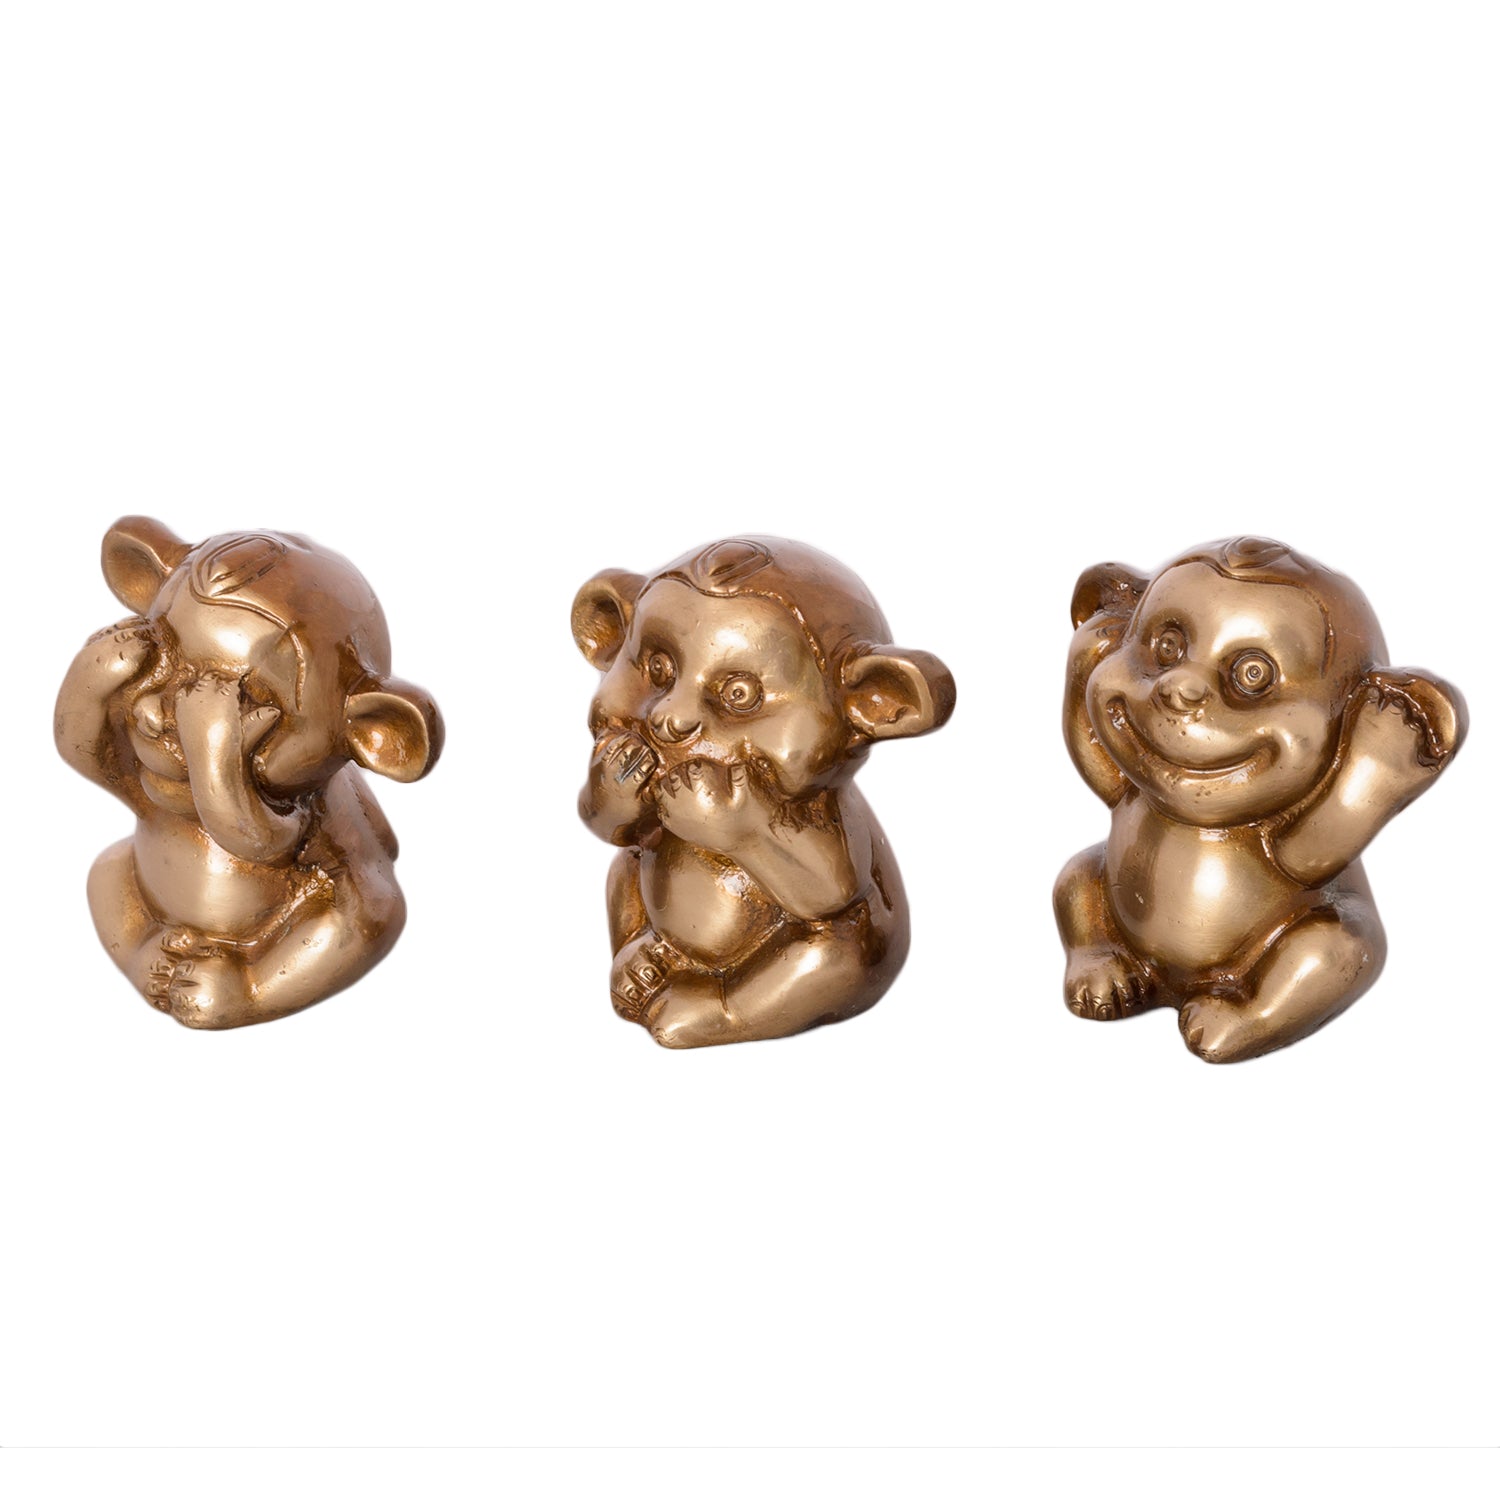 3 Musketeers Monkey Statues Set Brass Animal Figurine Decorative Showpiece 4